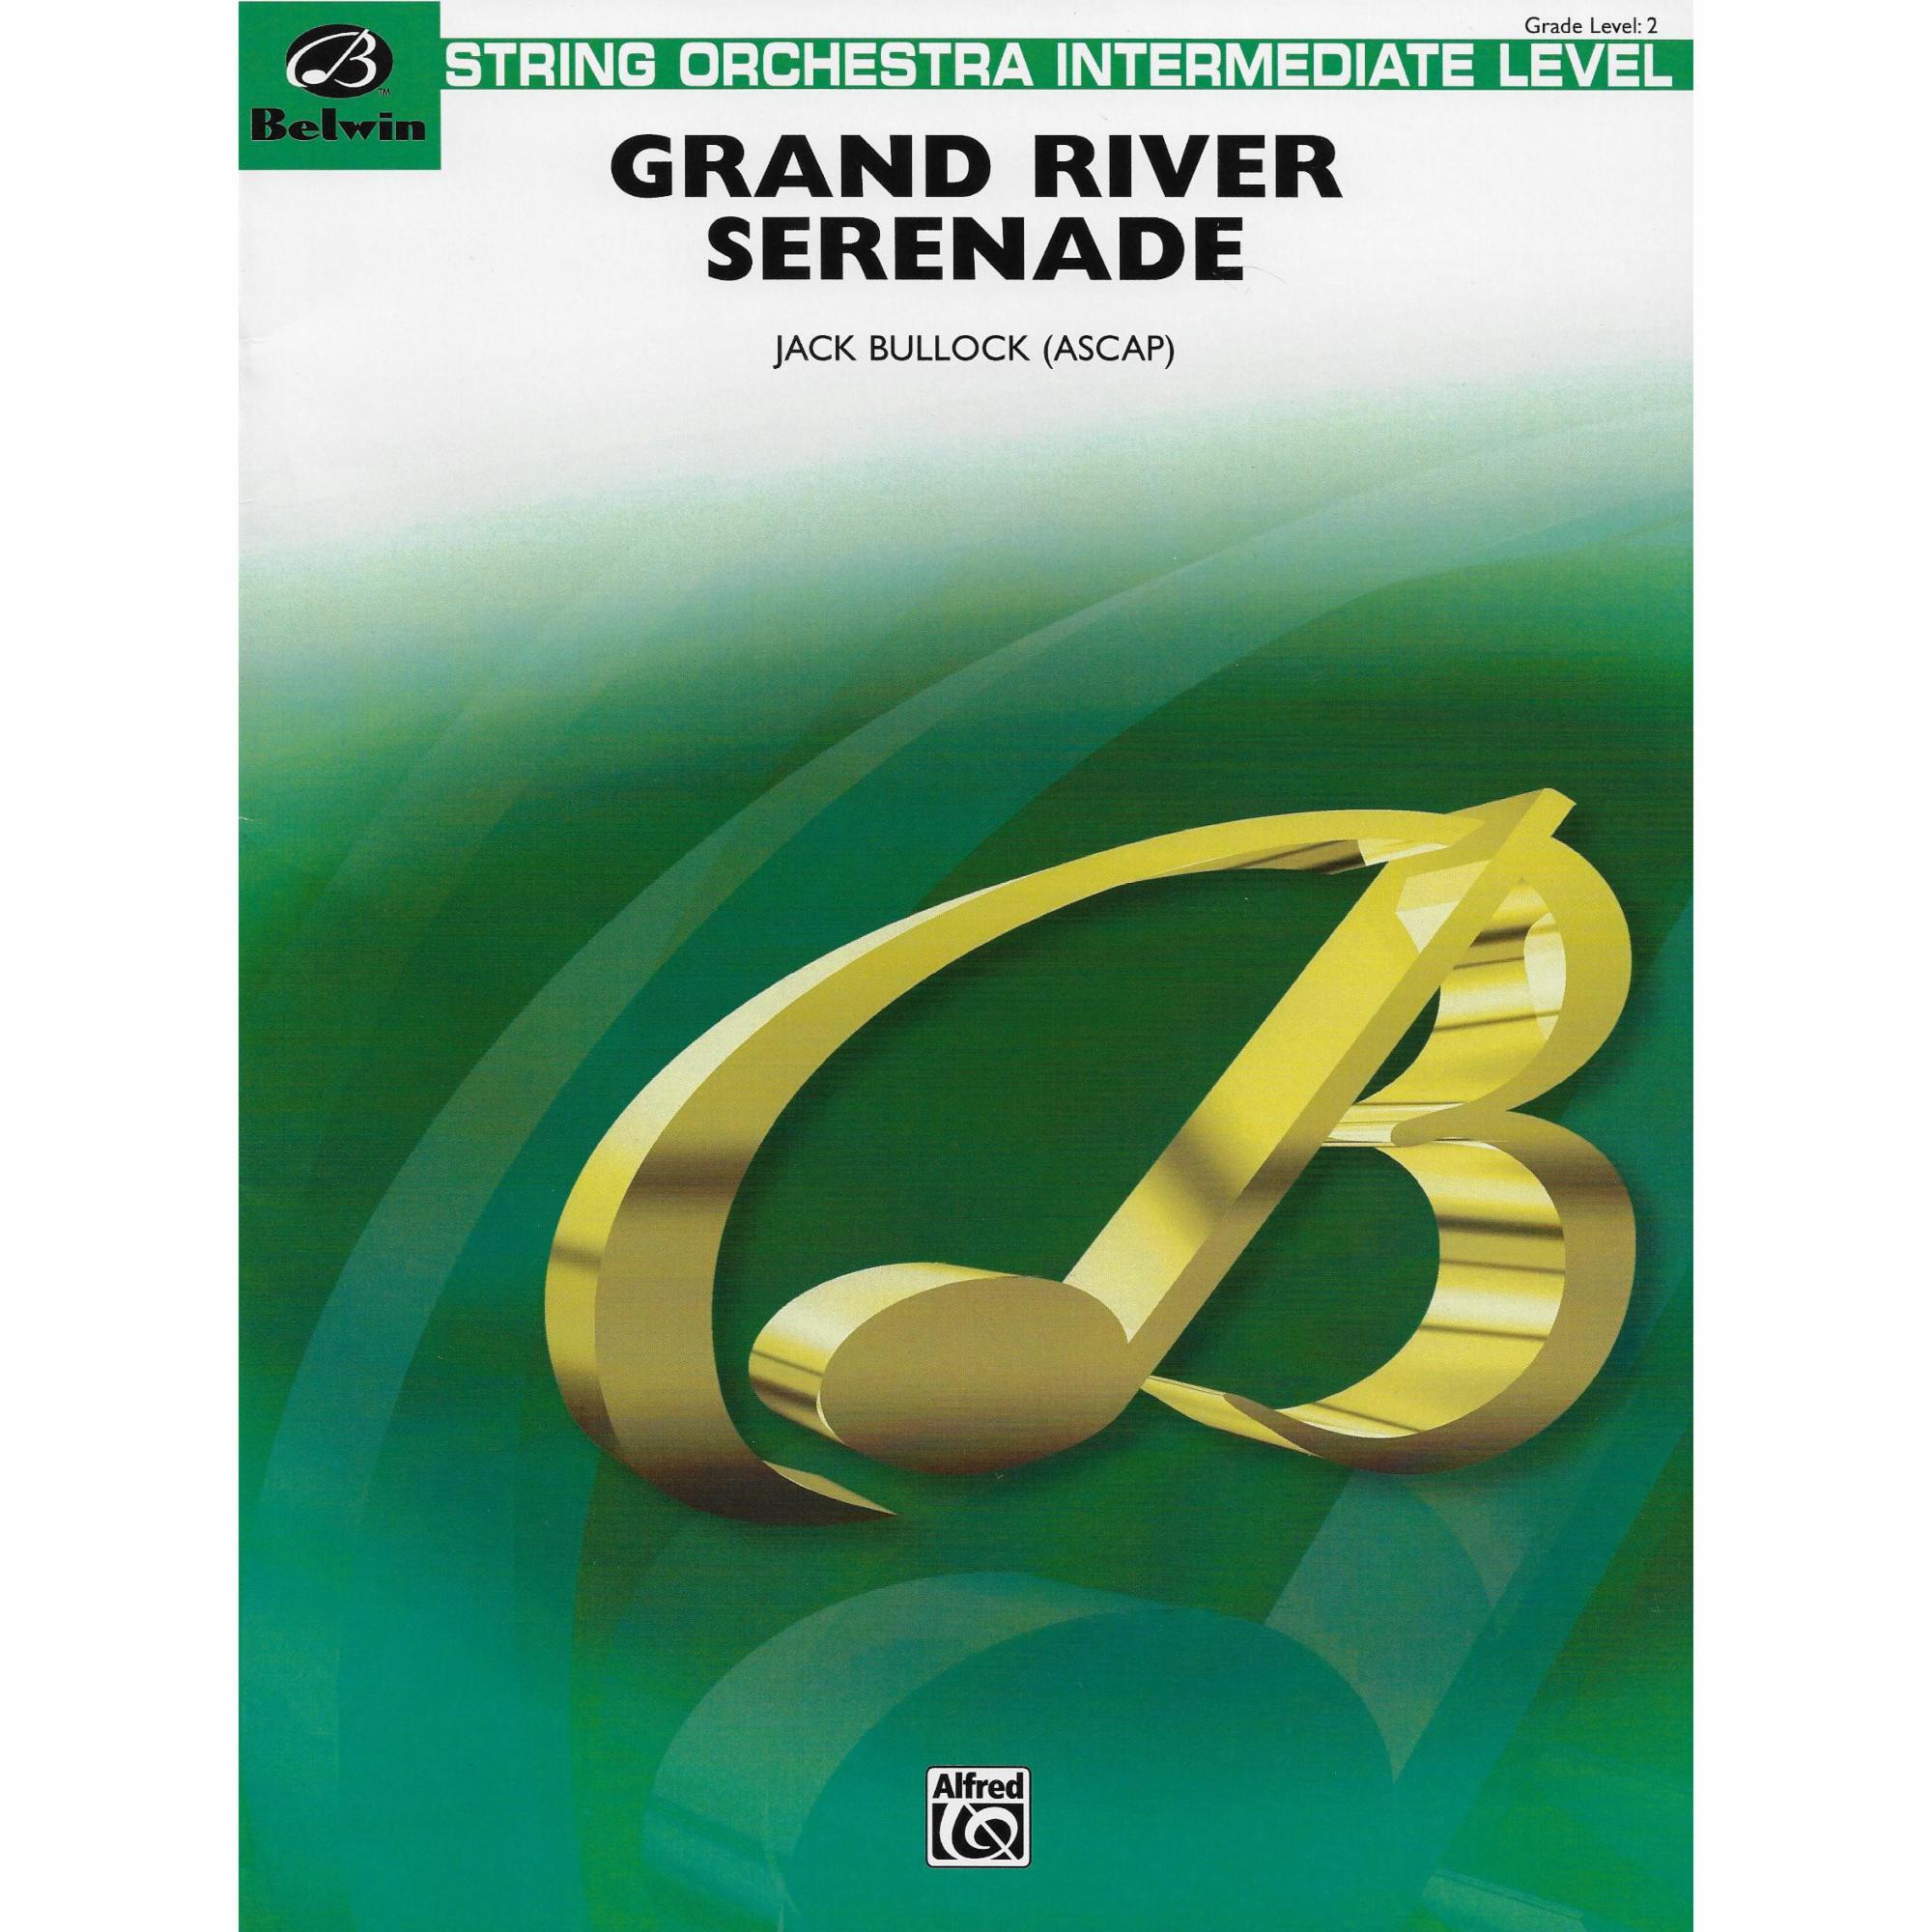 Grand River Serenade for String Orchestra